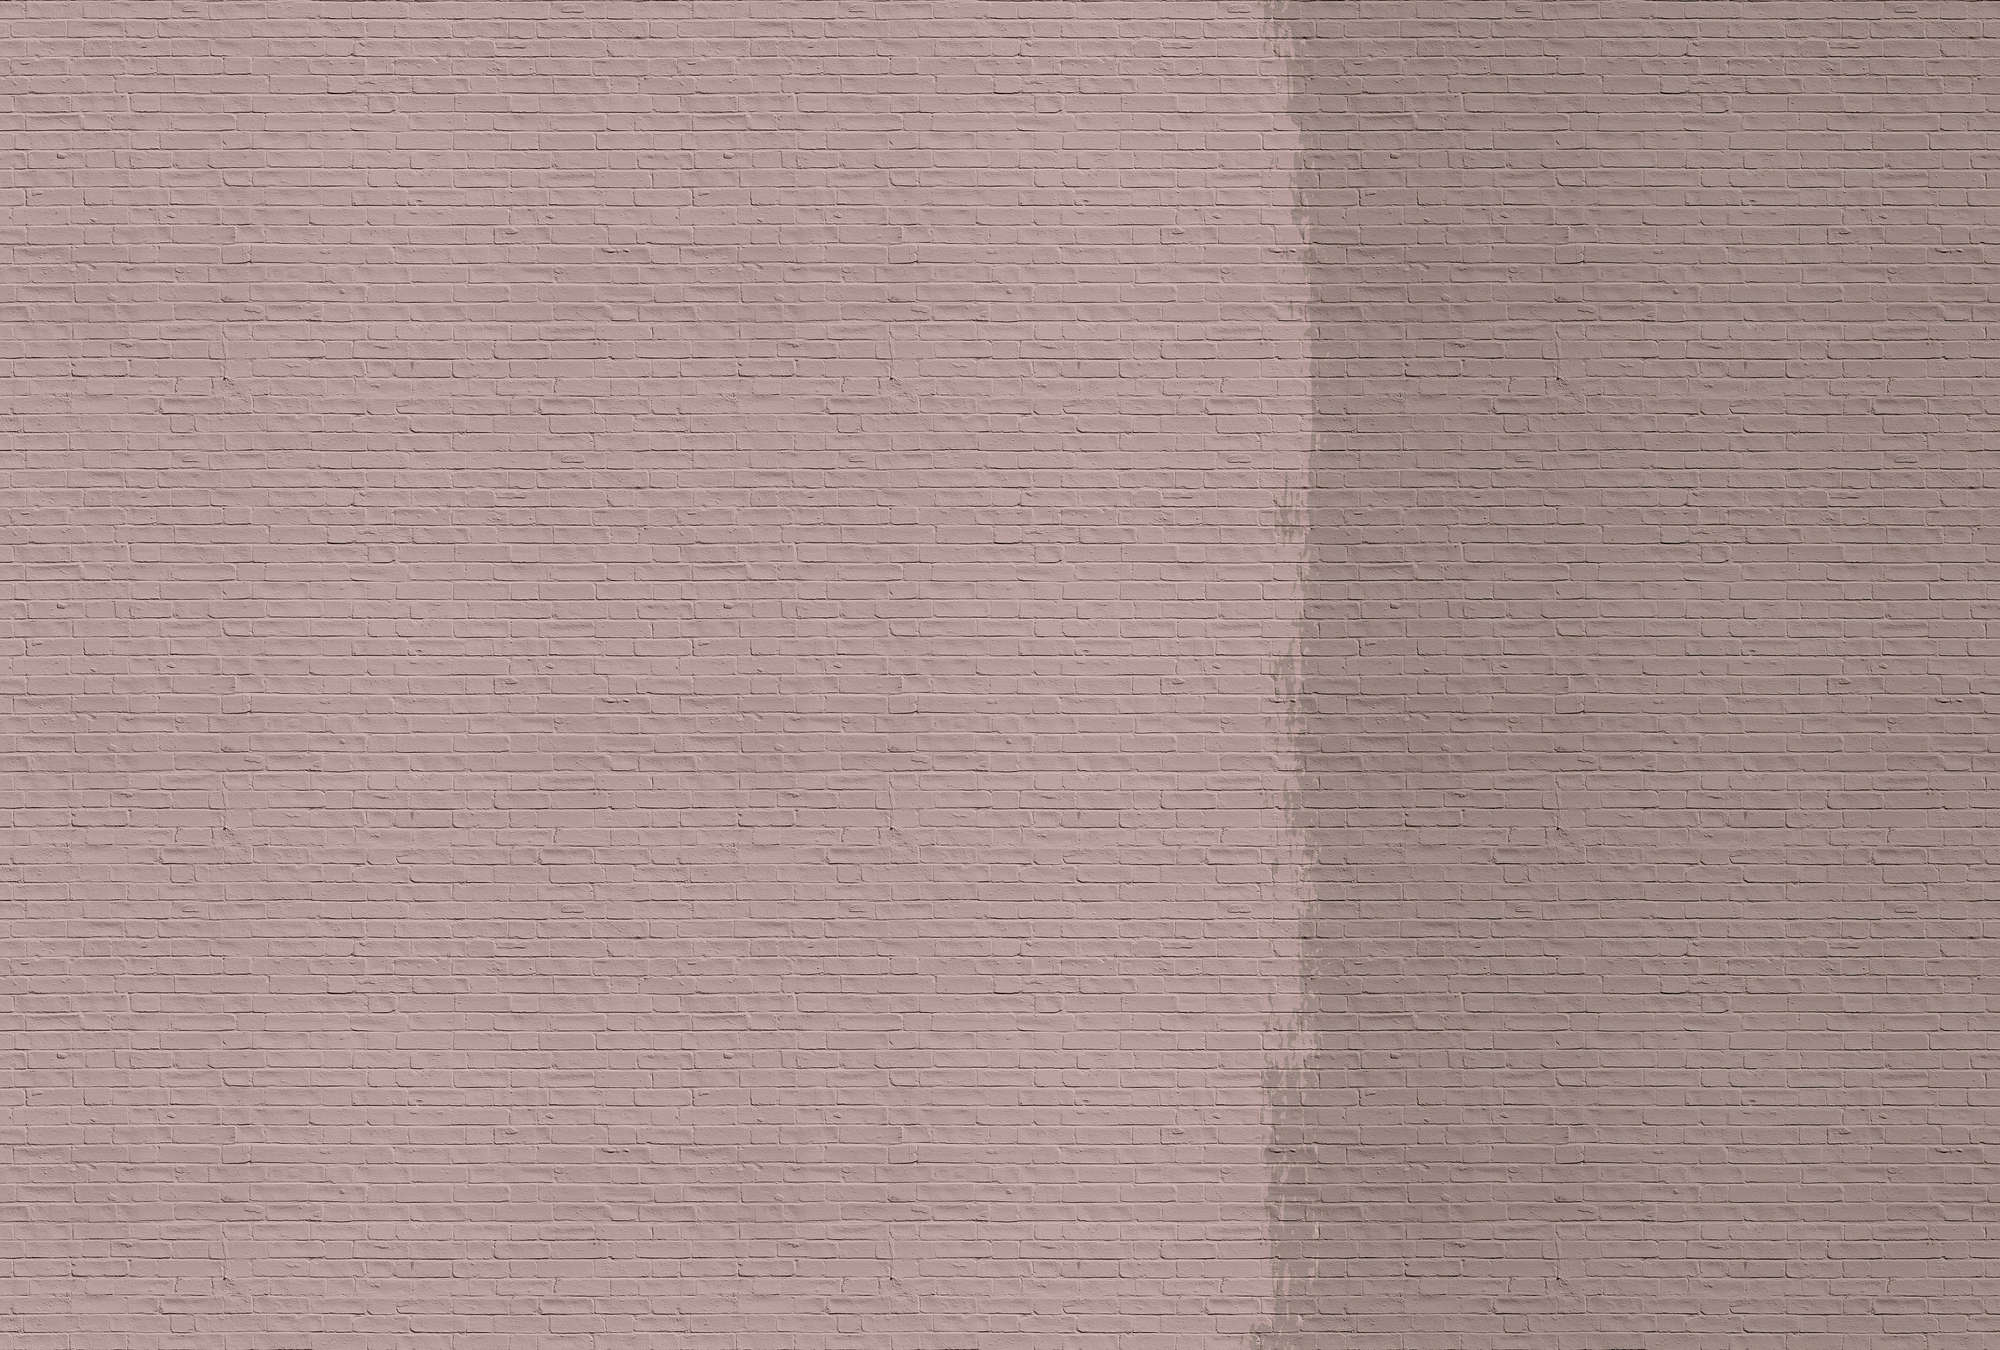             Tainted love 2 - Geschilderde baksteen muurschildering - Roze, Taupe | Premium gladde fleece
        